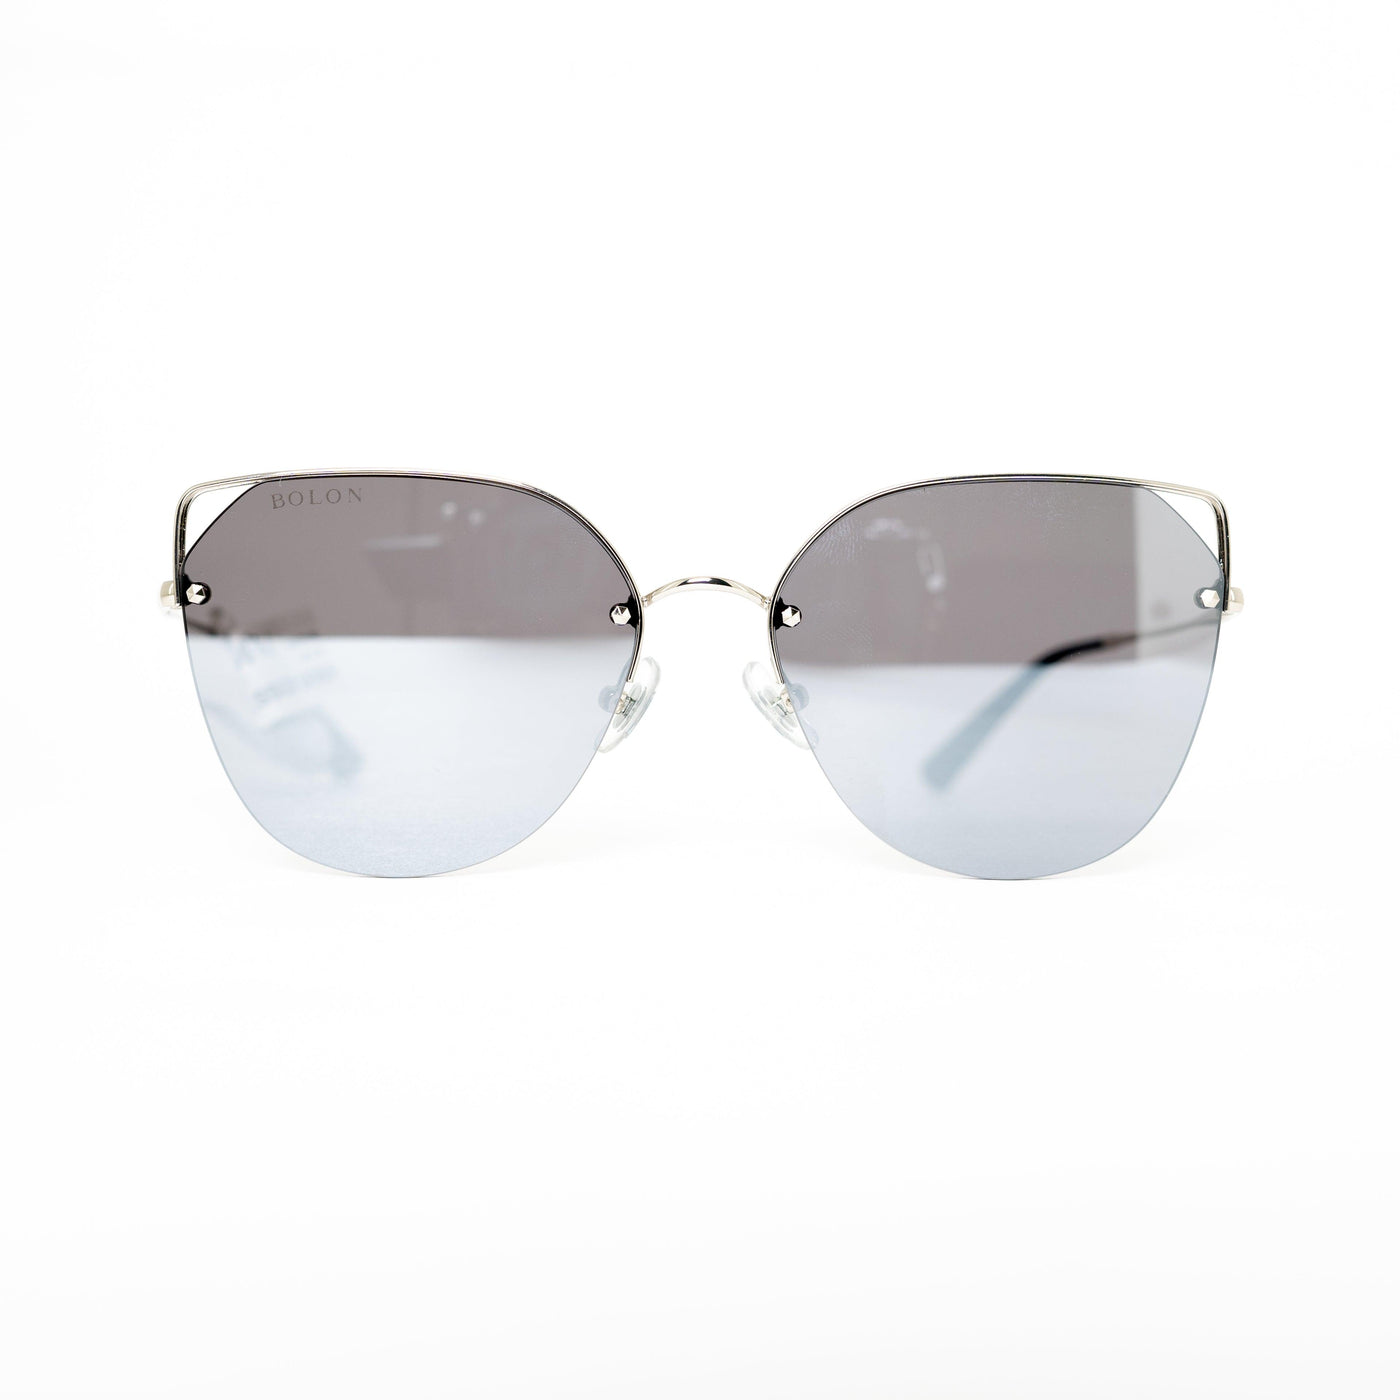 Bolon Sunglasses | BL7108/B90 - Vision Express Optical Philippines